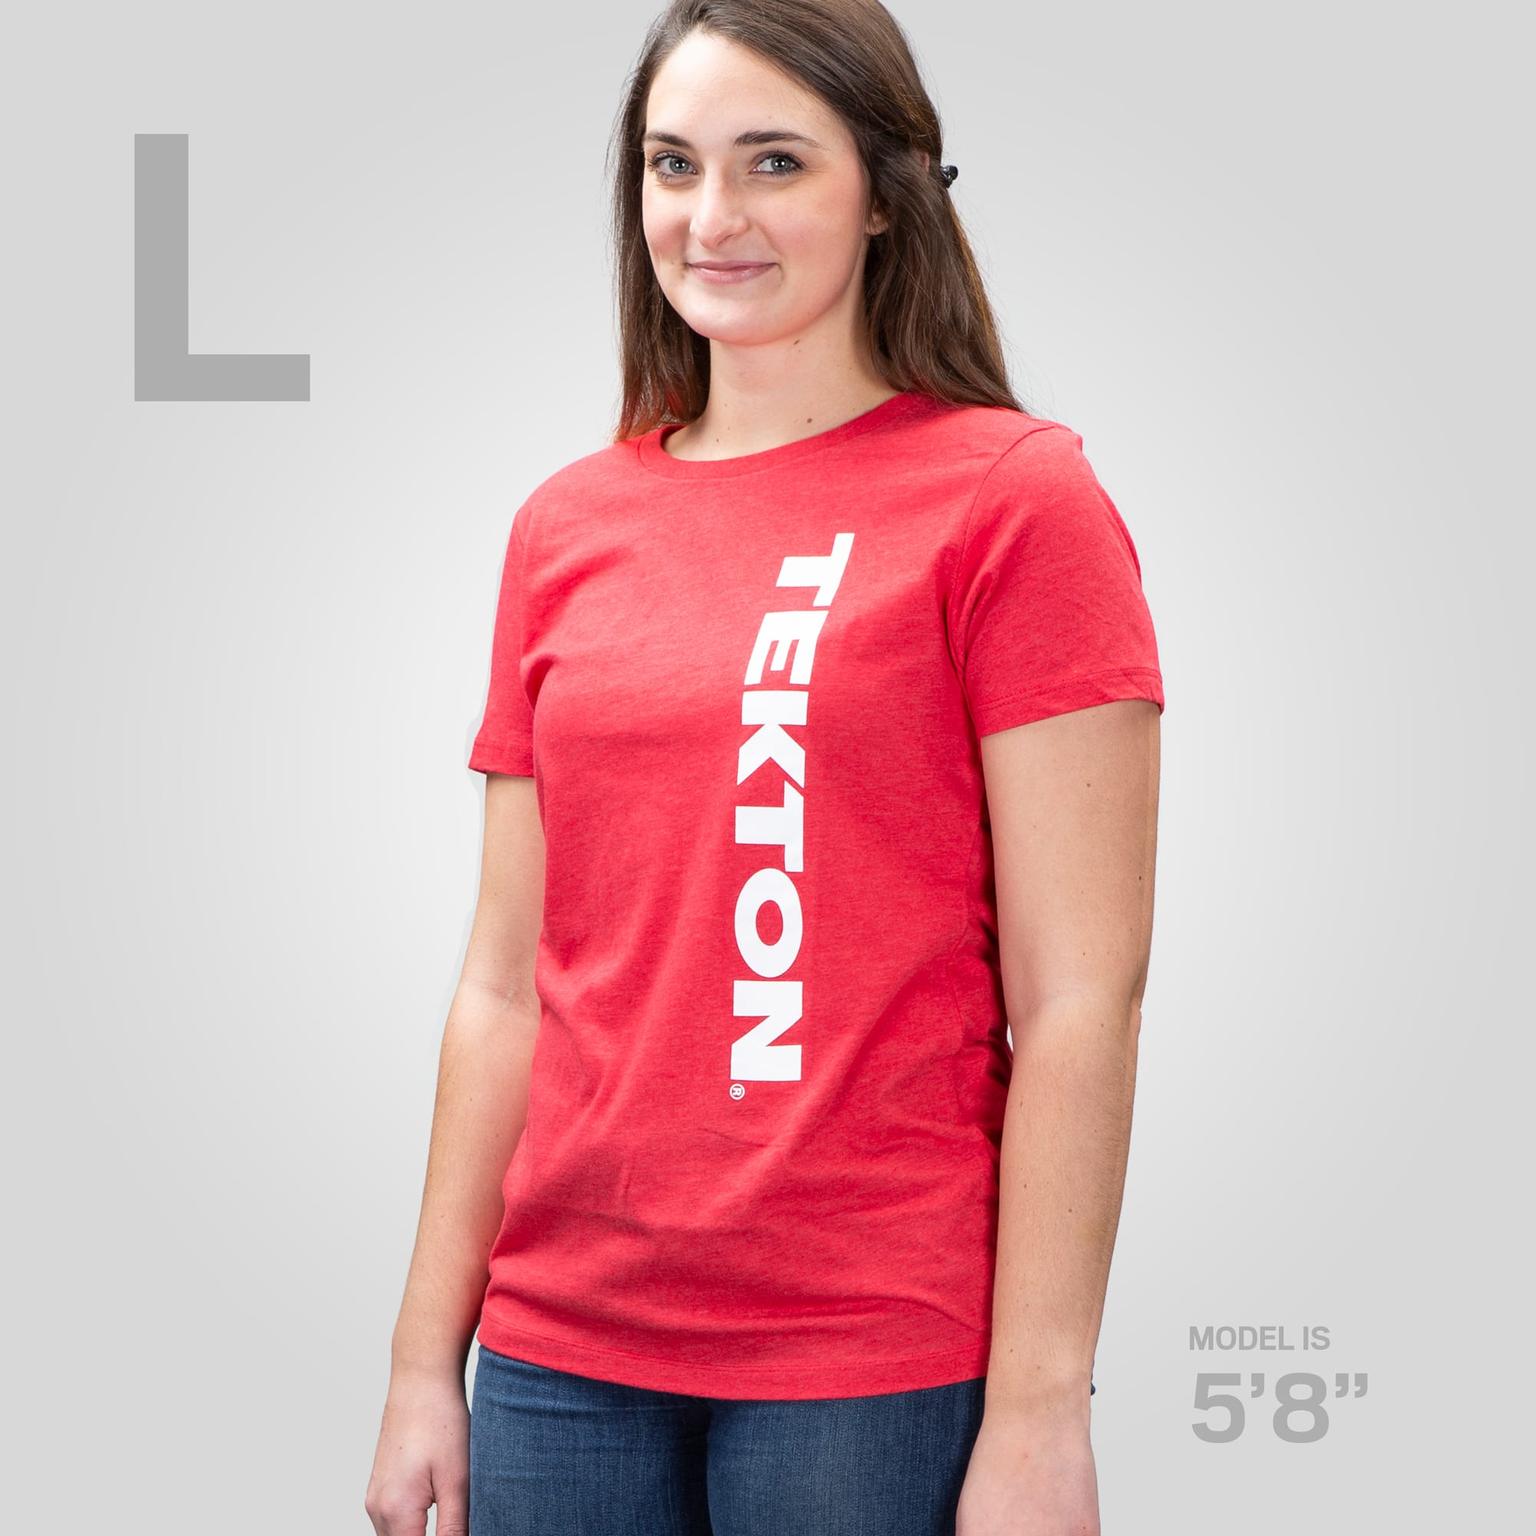 TEKTON APG32017 Tekton Women's T-Shirt, Red (L)